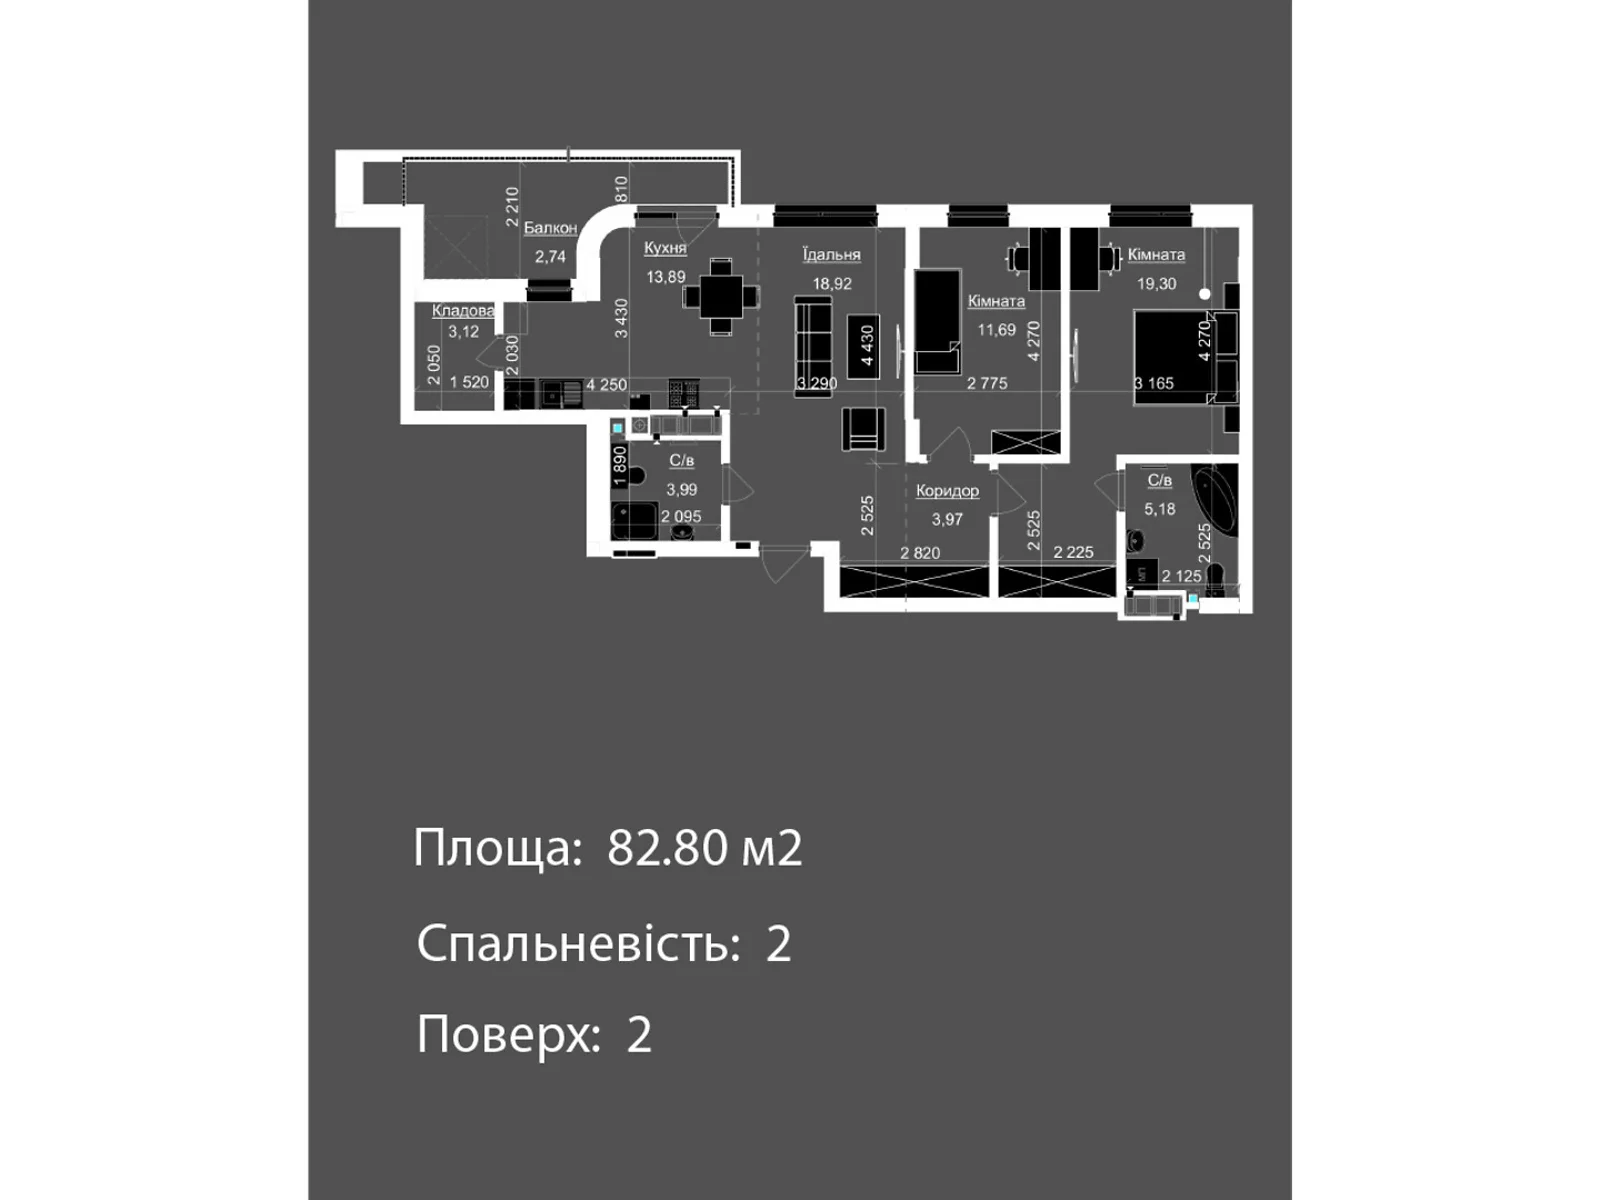 Продается 2-комнатная квартира 82.8 кв. м в Львове, цена: 124531 $ - фото 1